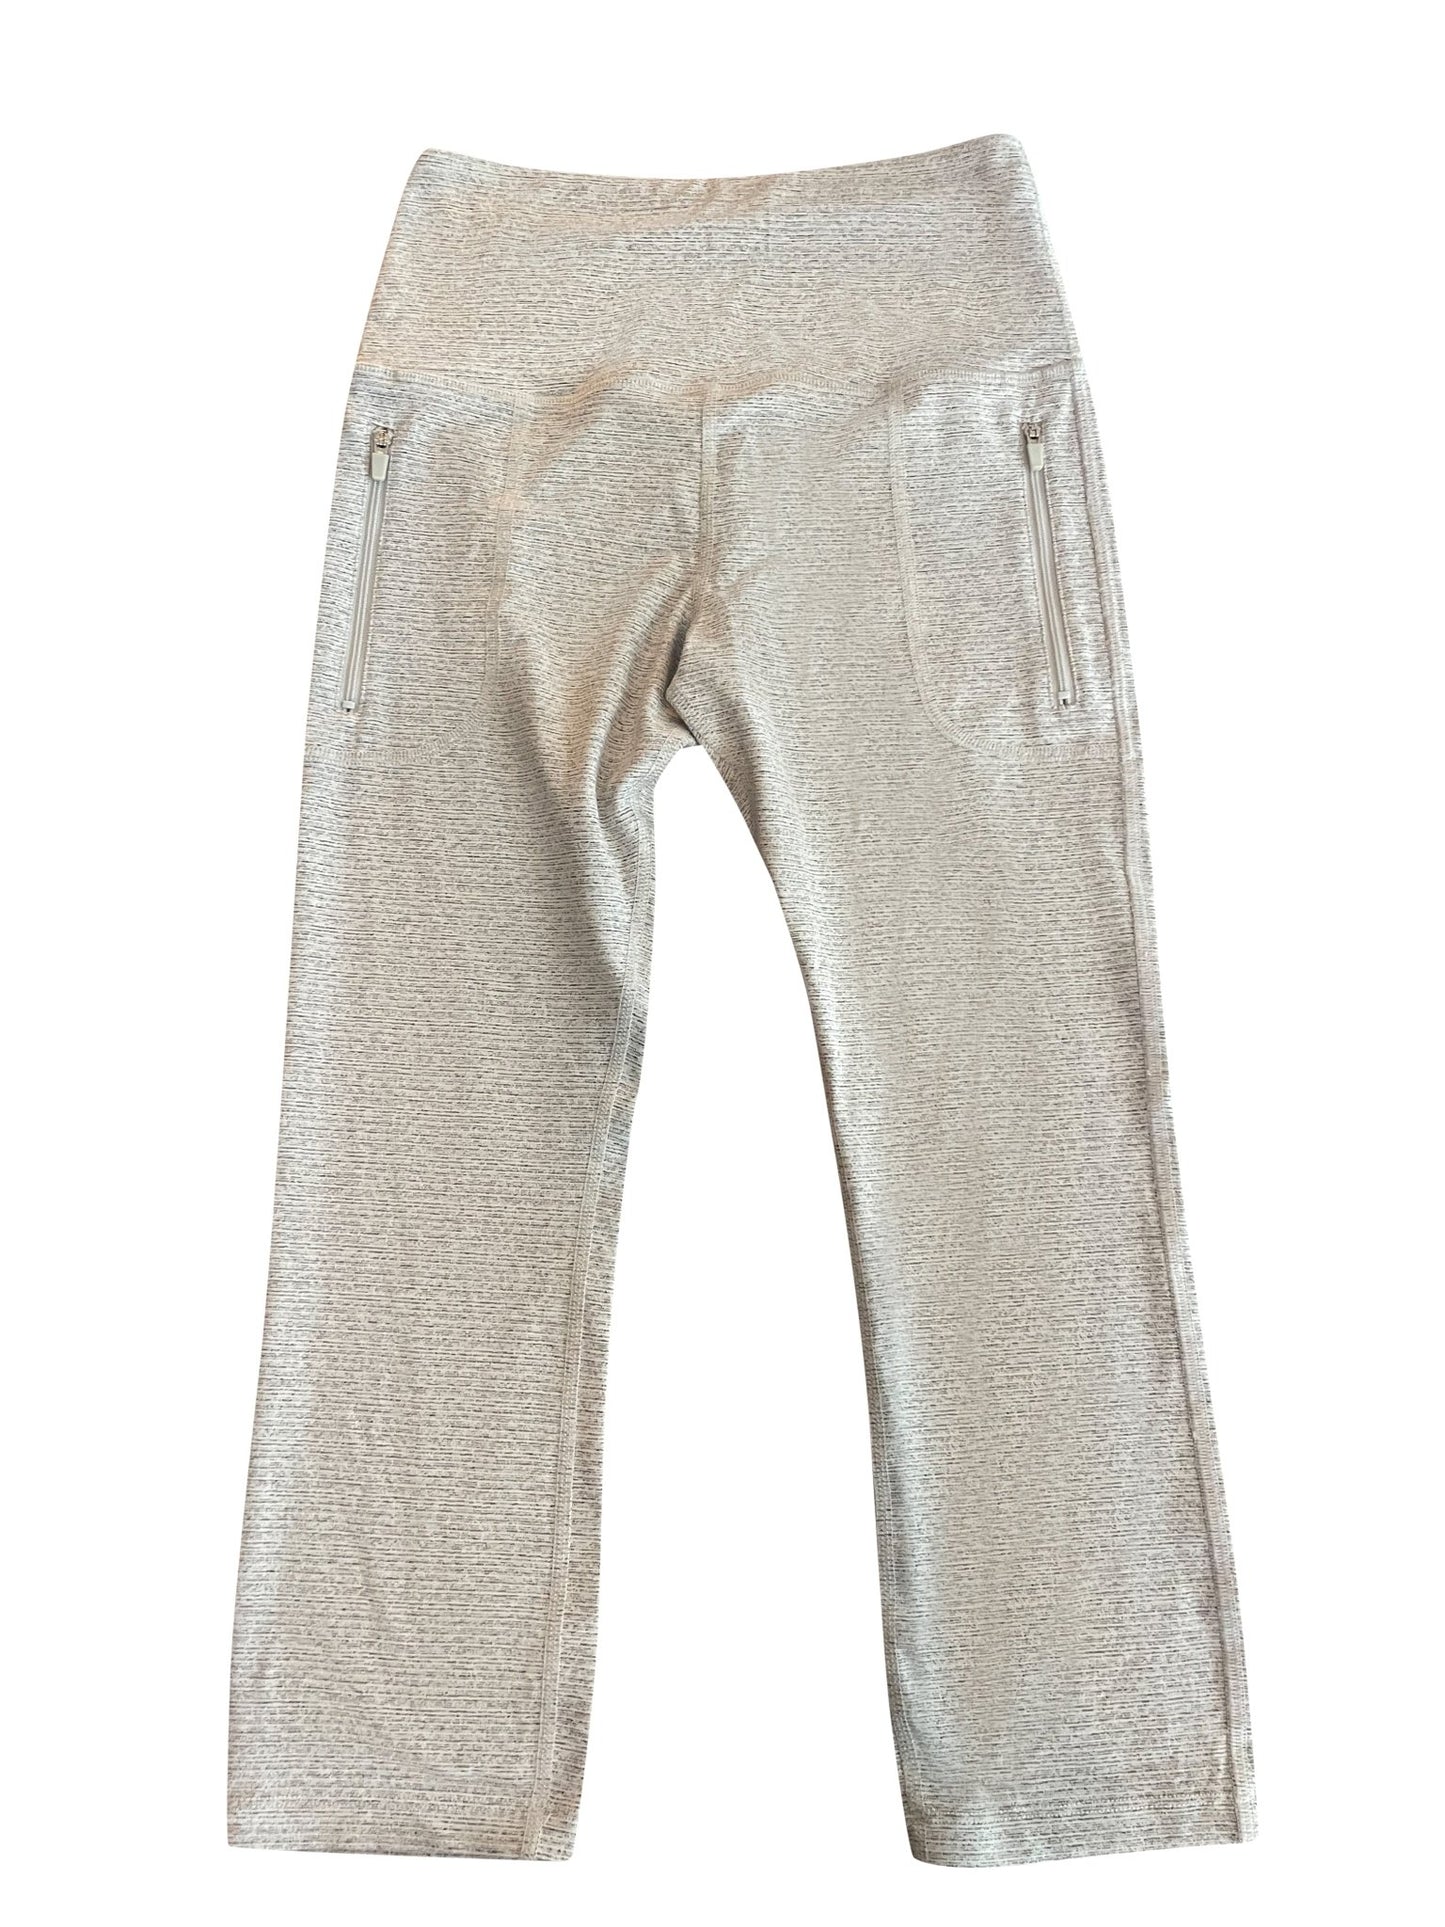 Lorna Jane grey 3/4 length leggings | size 8-10